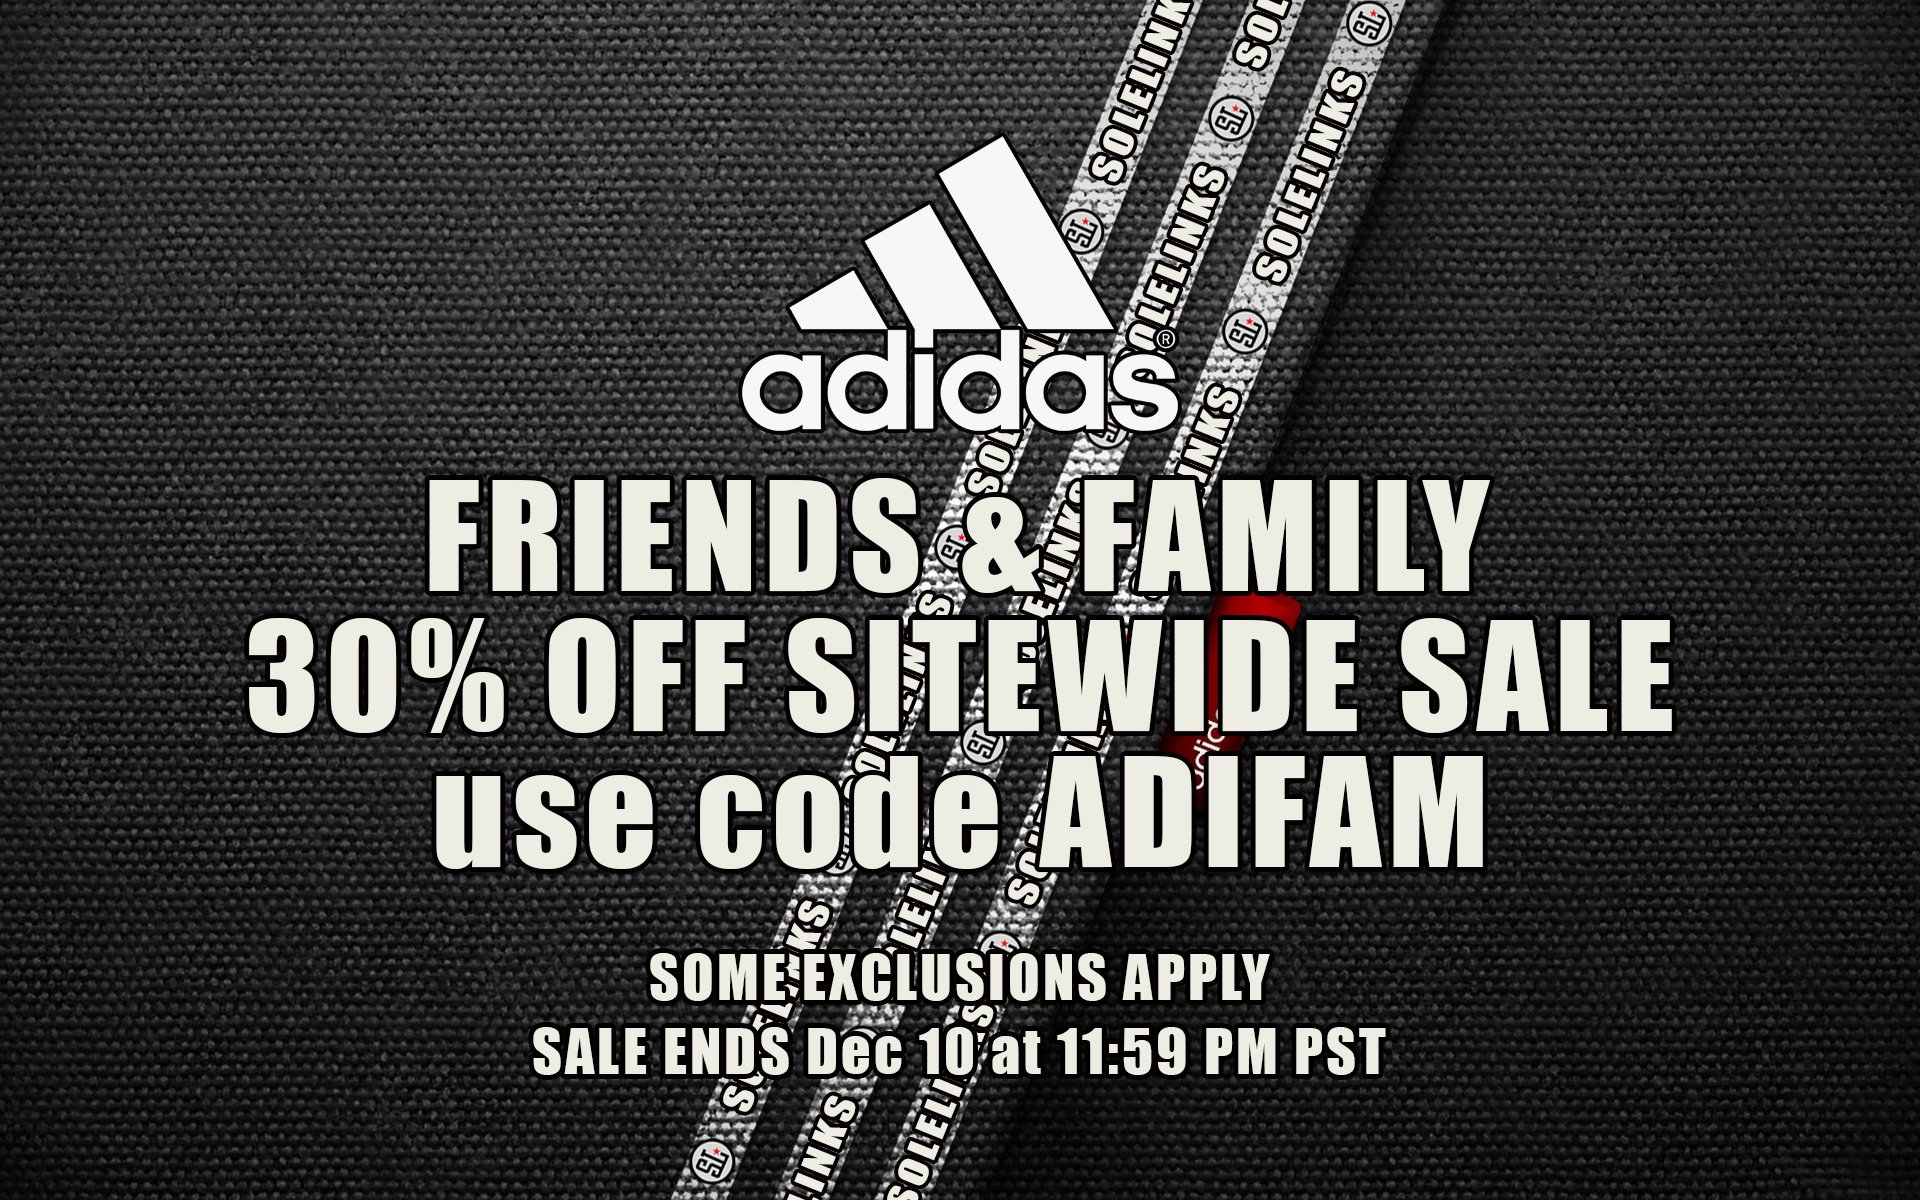 adidas friends code 